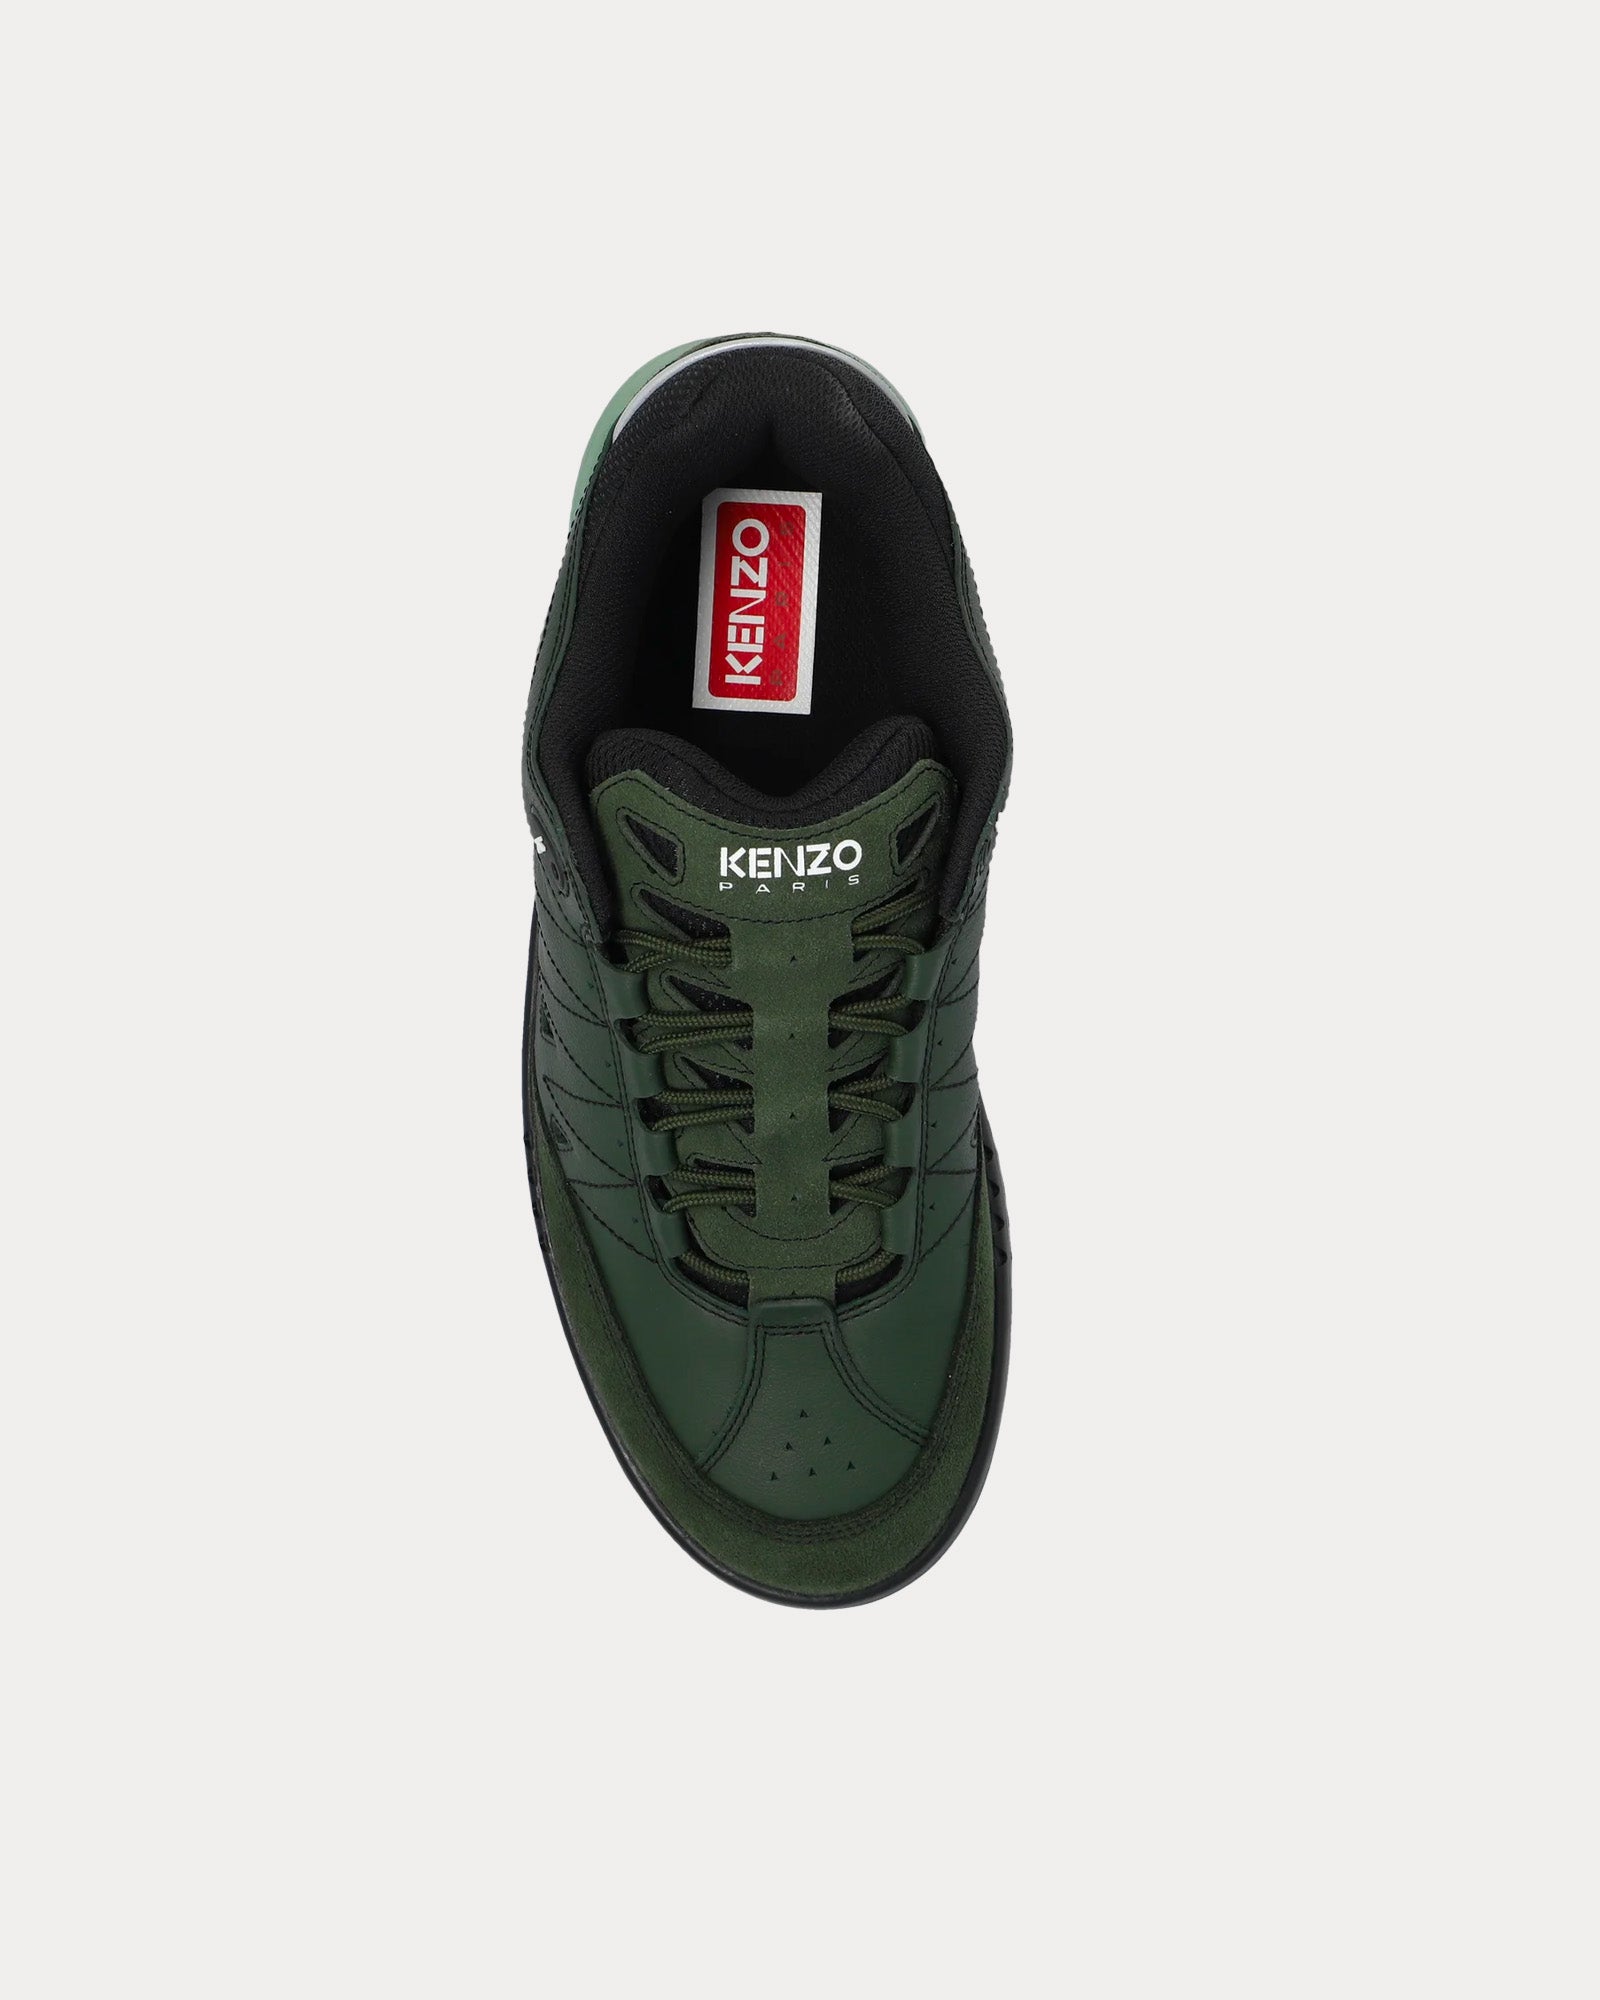 Kenzo - Kenzo-PXT Green Low Top Sneakers